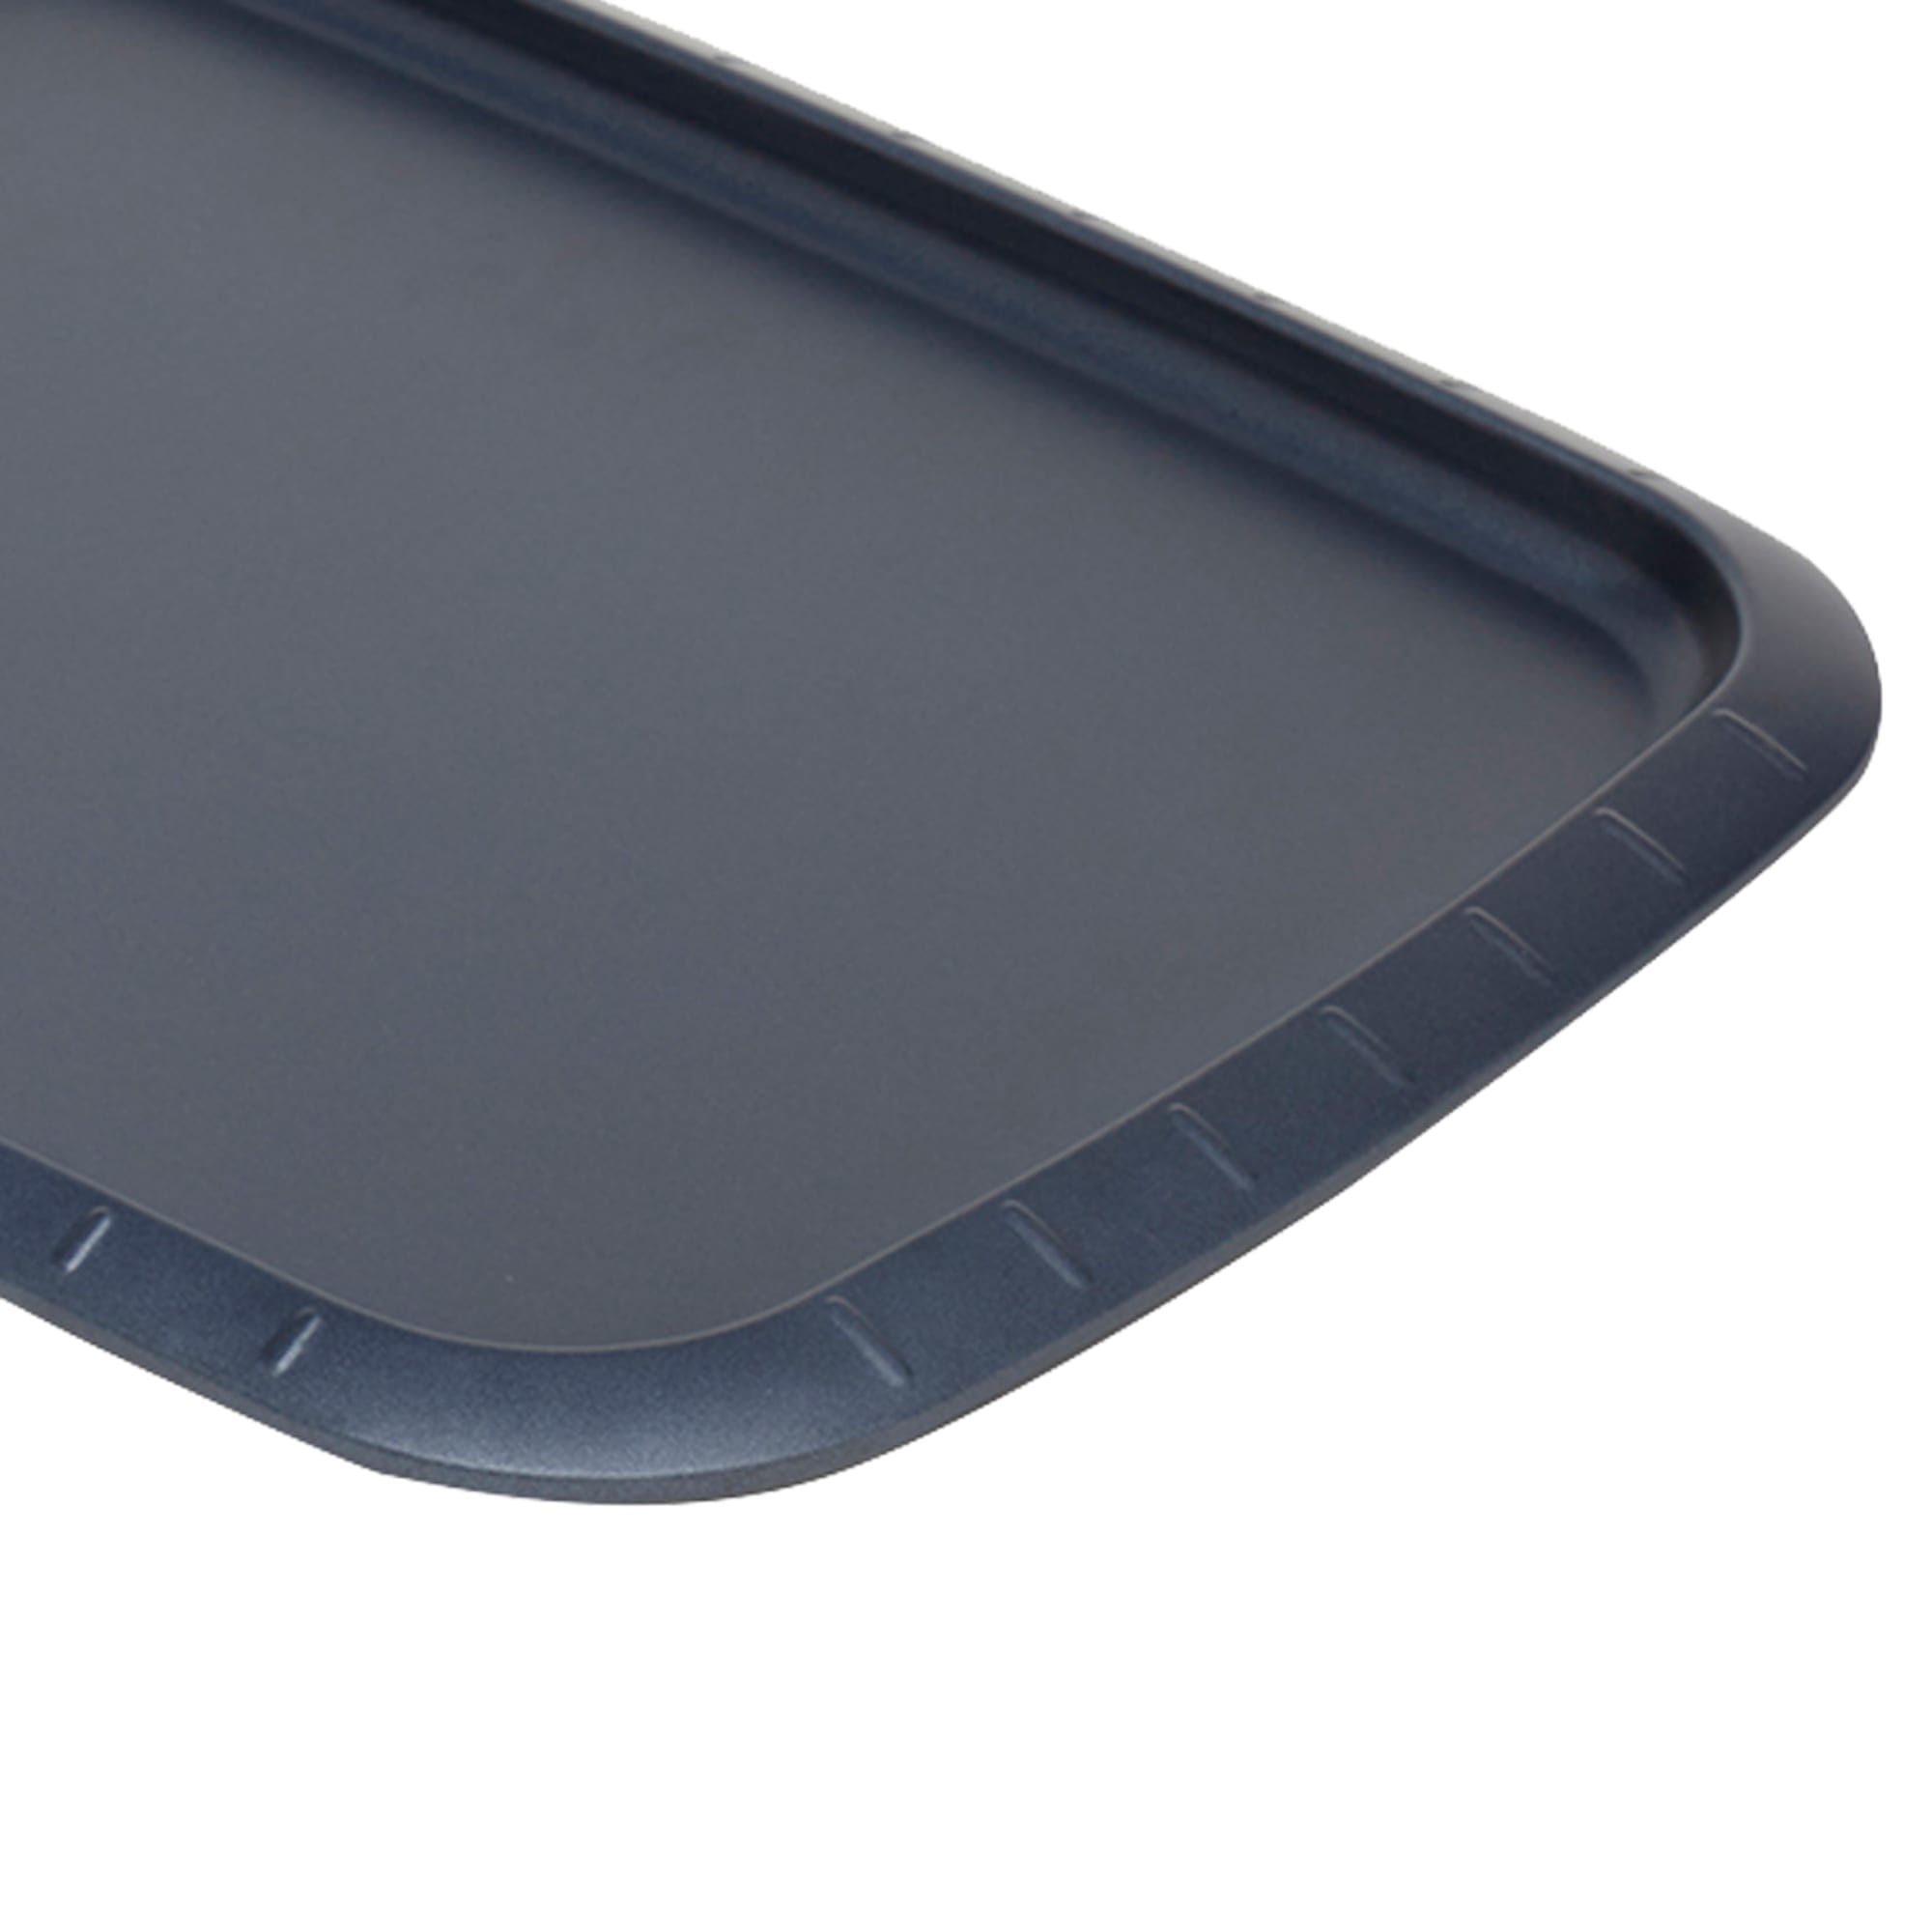 Michael Graves Design Textured Non-Stick 12” x 16” Carbon Steel Cookie Sheet, Indigo $7.00 EACH, CASE PACK OF 12